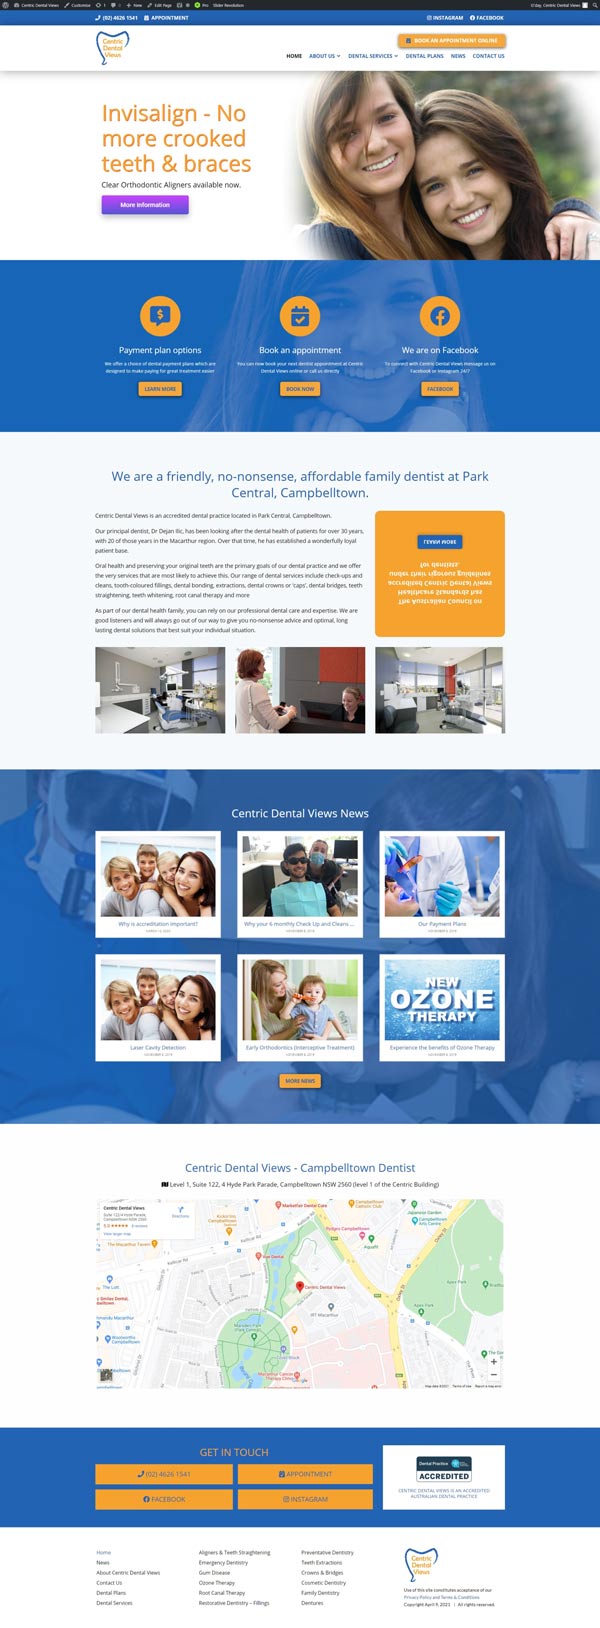 Centric Dental Views website designed by Big Red Bus Websites - ezample 1